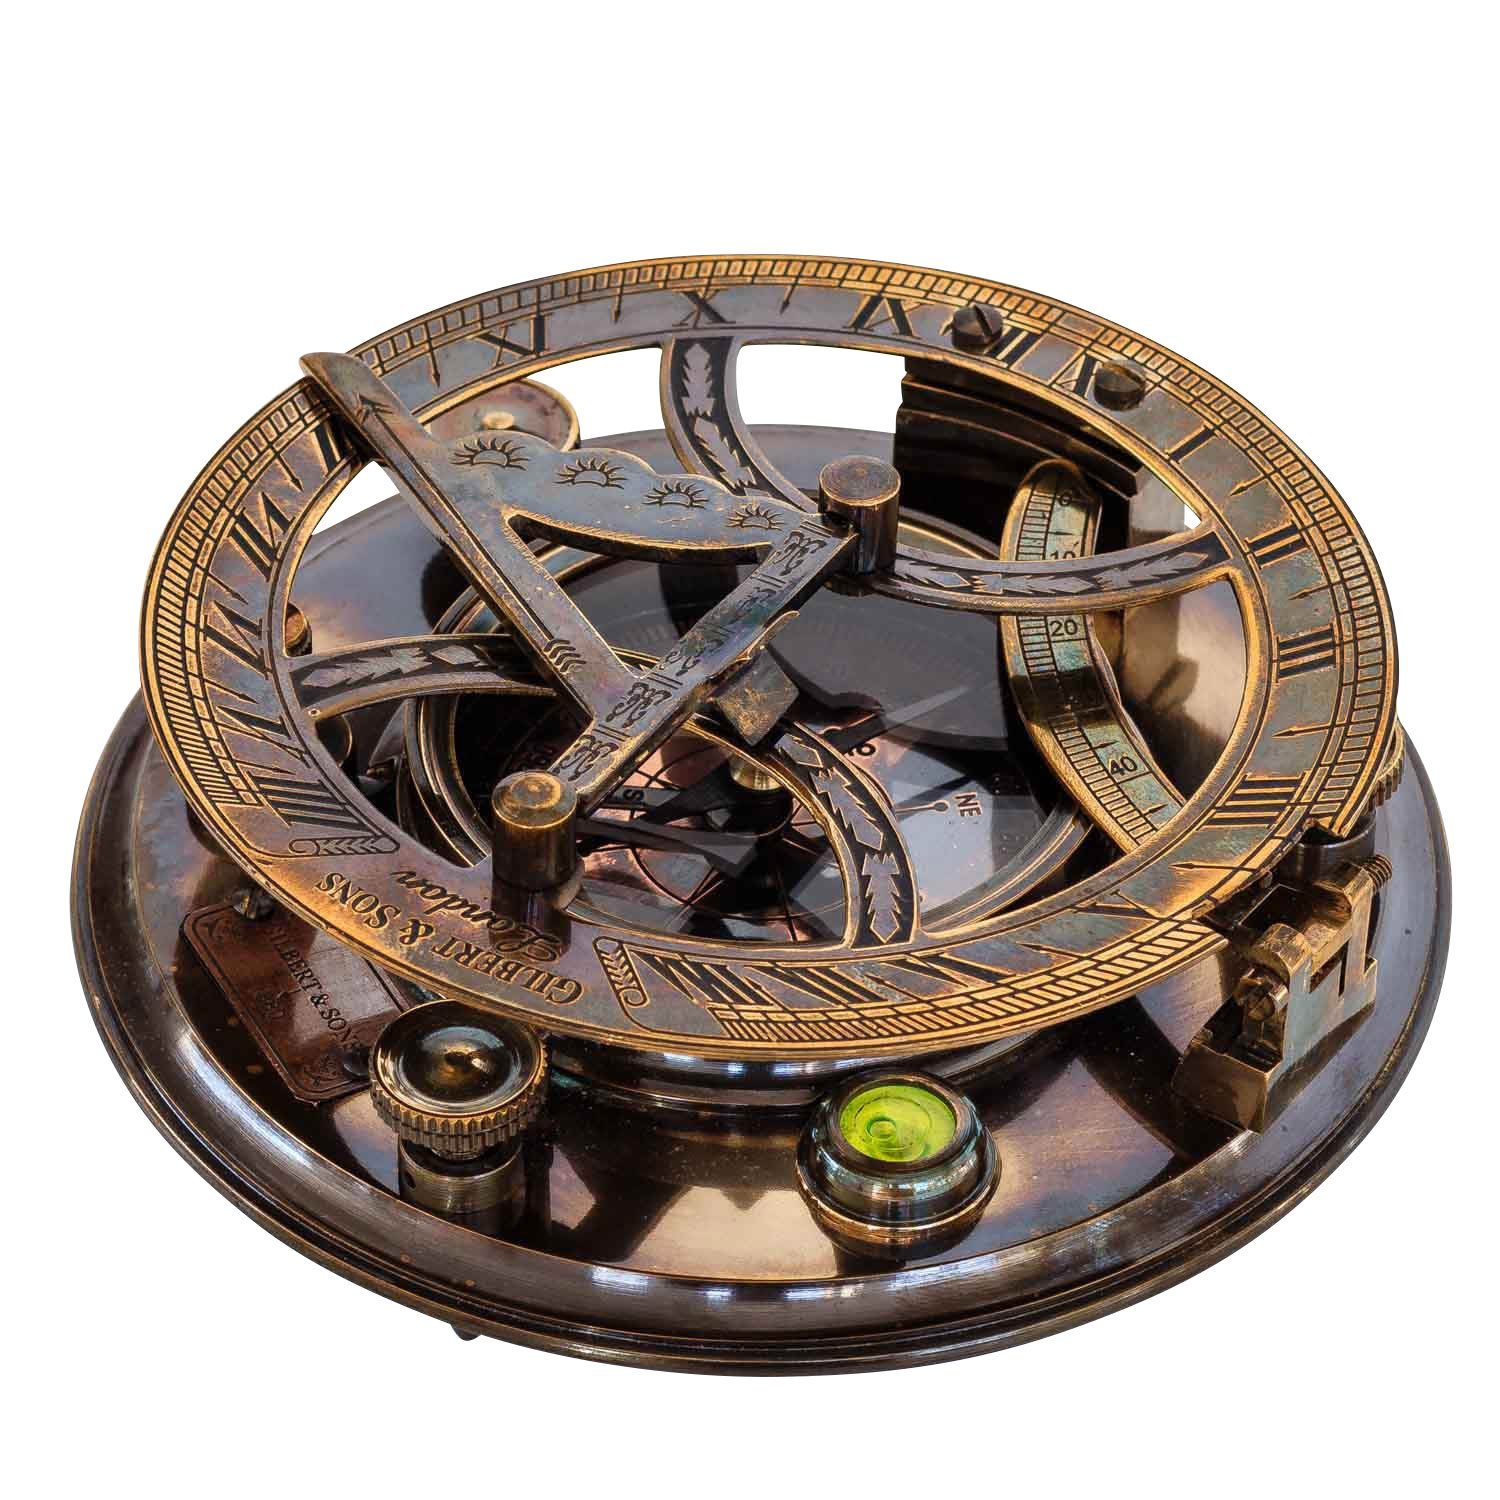 Messing Kompass Kompass 13 Sonnenuhr Maritim Glas Aubaho Dekoration Antik-Stil Replik